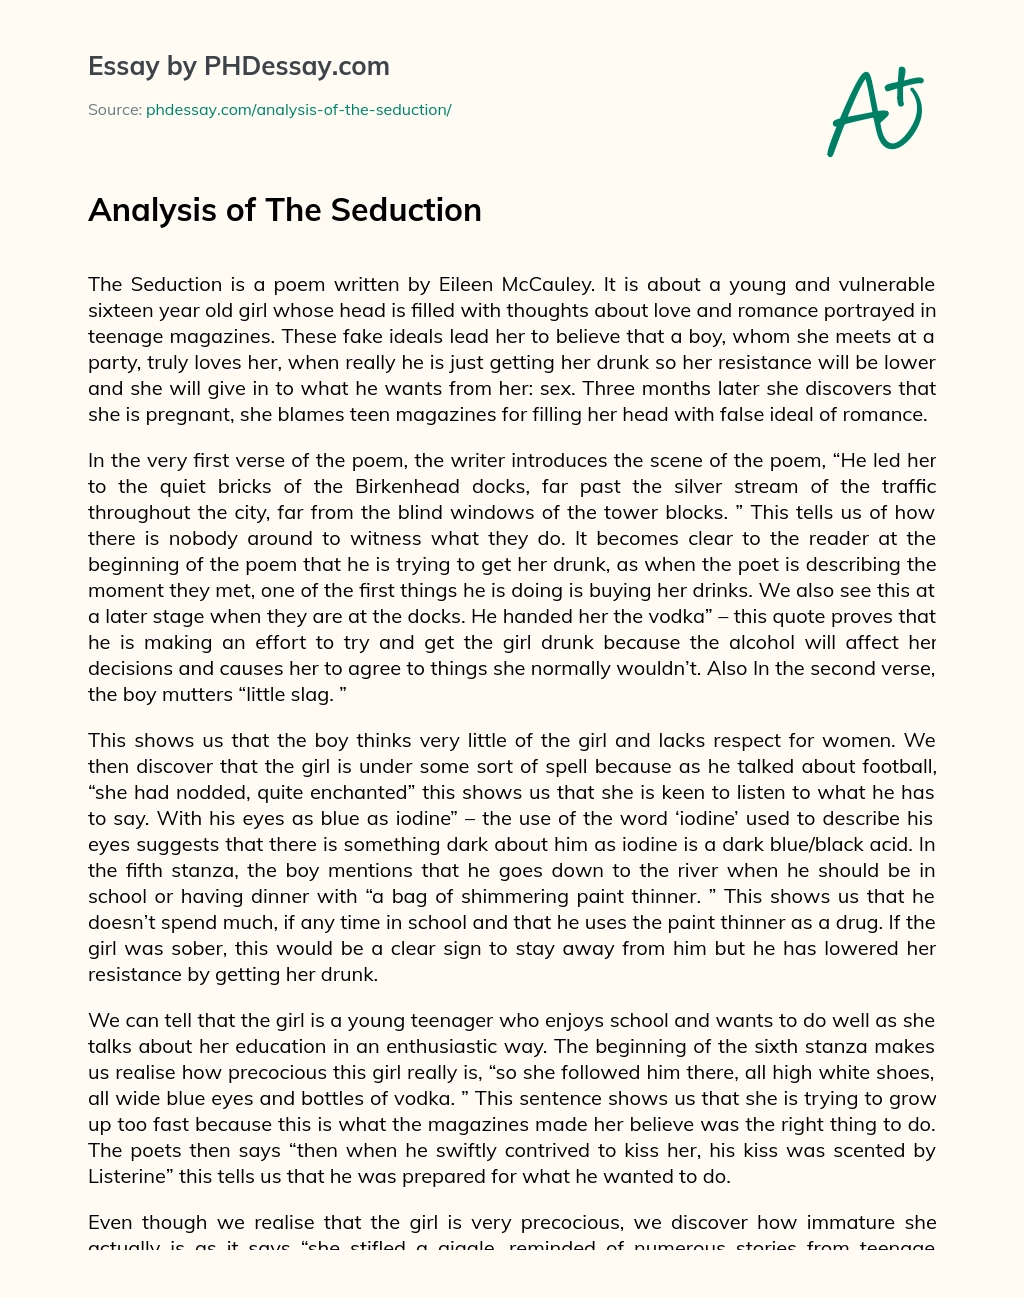 Analysis of The Seduction essay